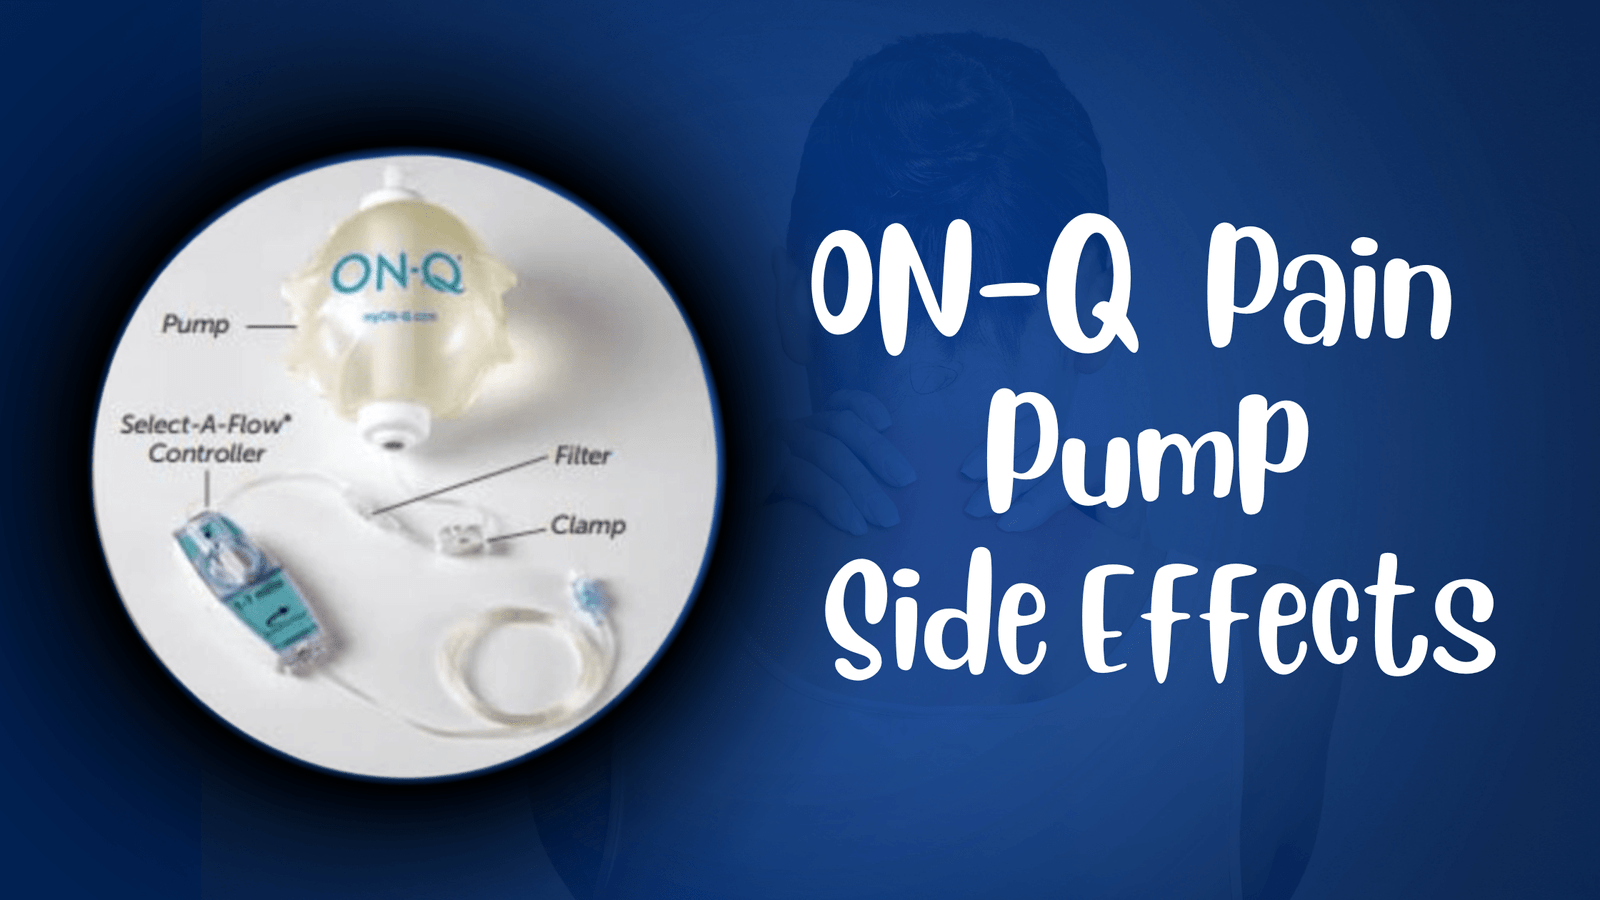 ON-Q Pain Pump Side Effect